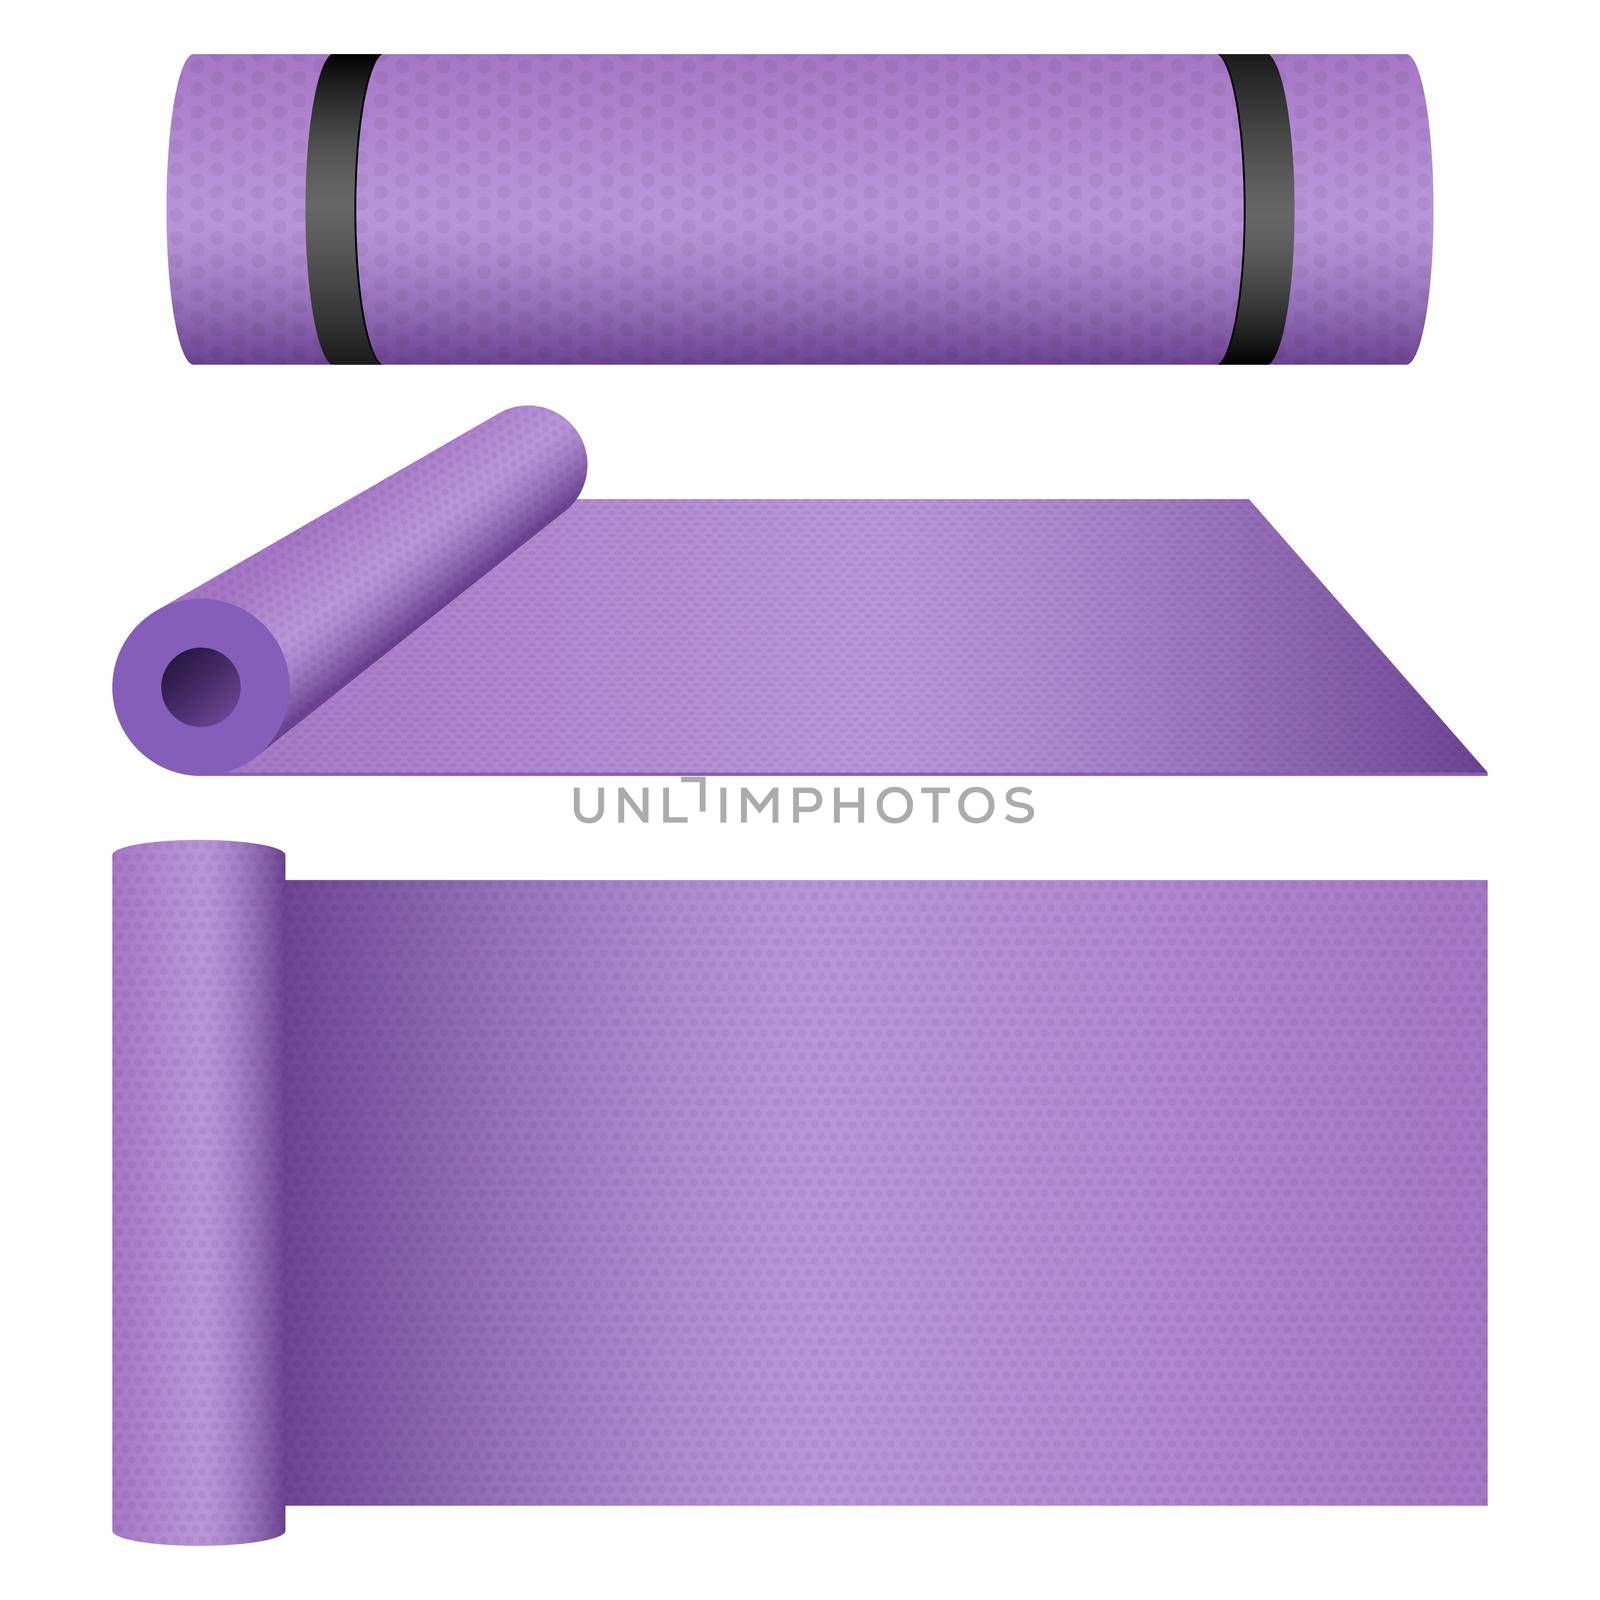 Yoga mat vector design illustration isolated on white background